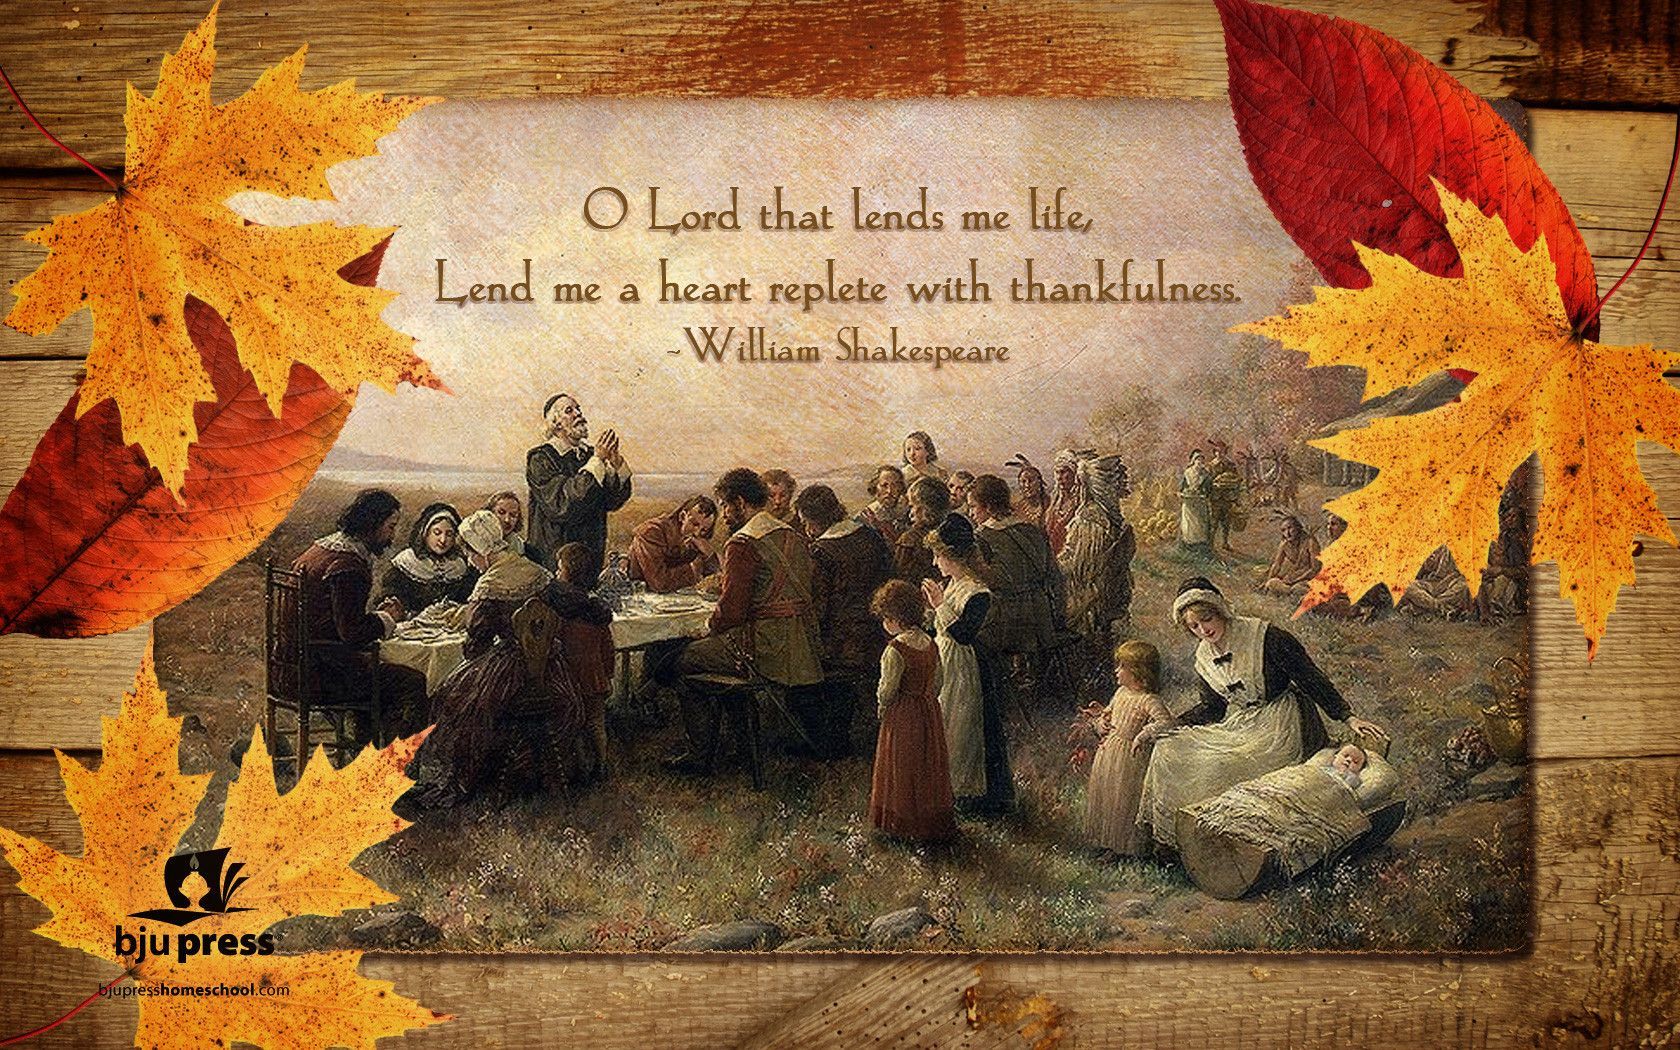 Thanksgiving Desktop Wallpaper Background Sf